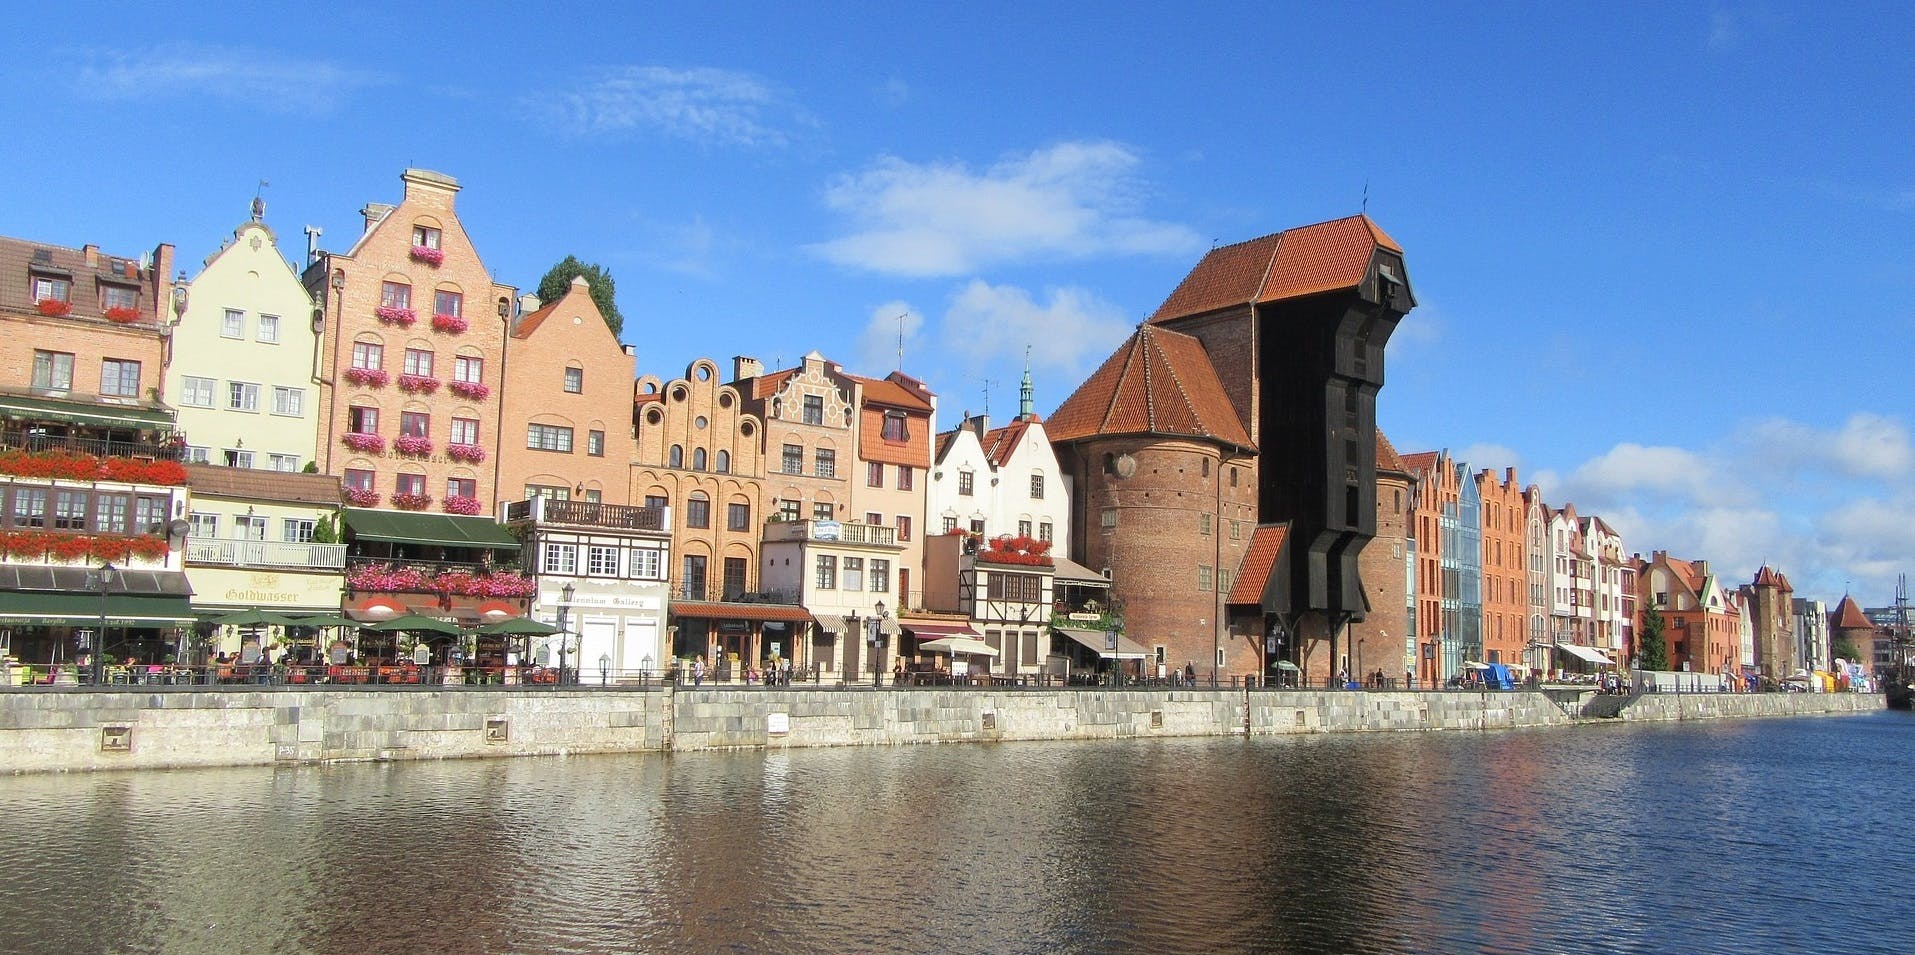 Visite en petit groupe de Gdansk et Malbork depuis Varsovie